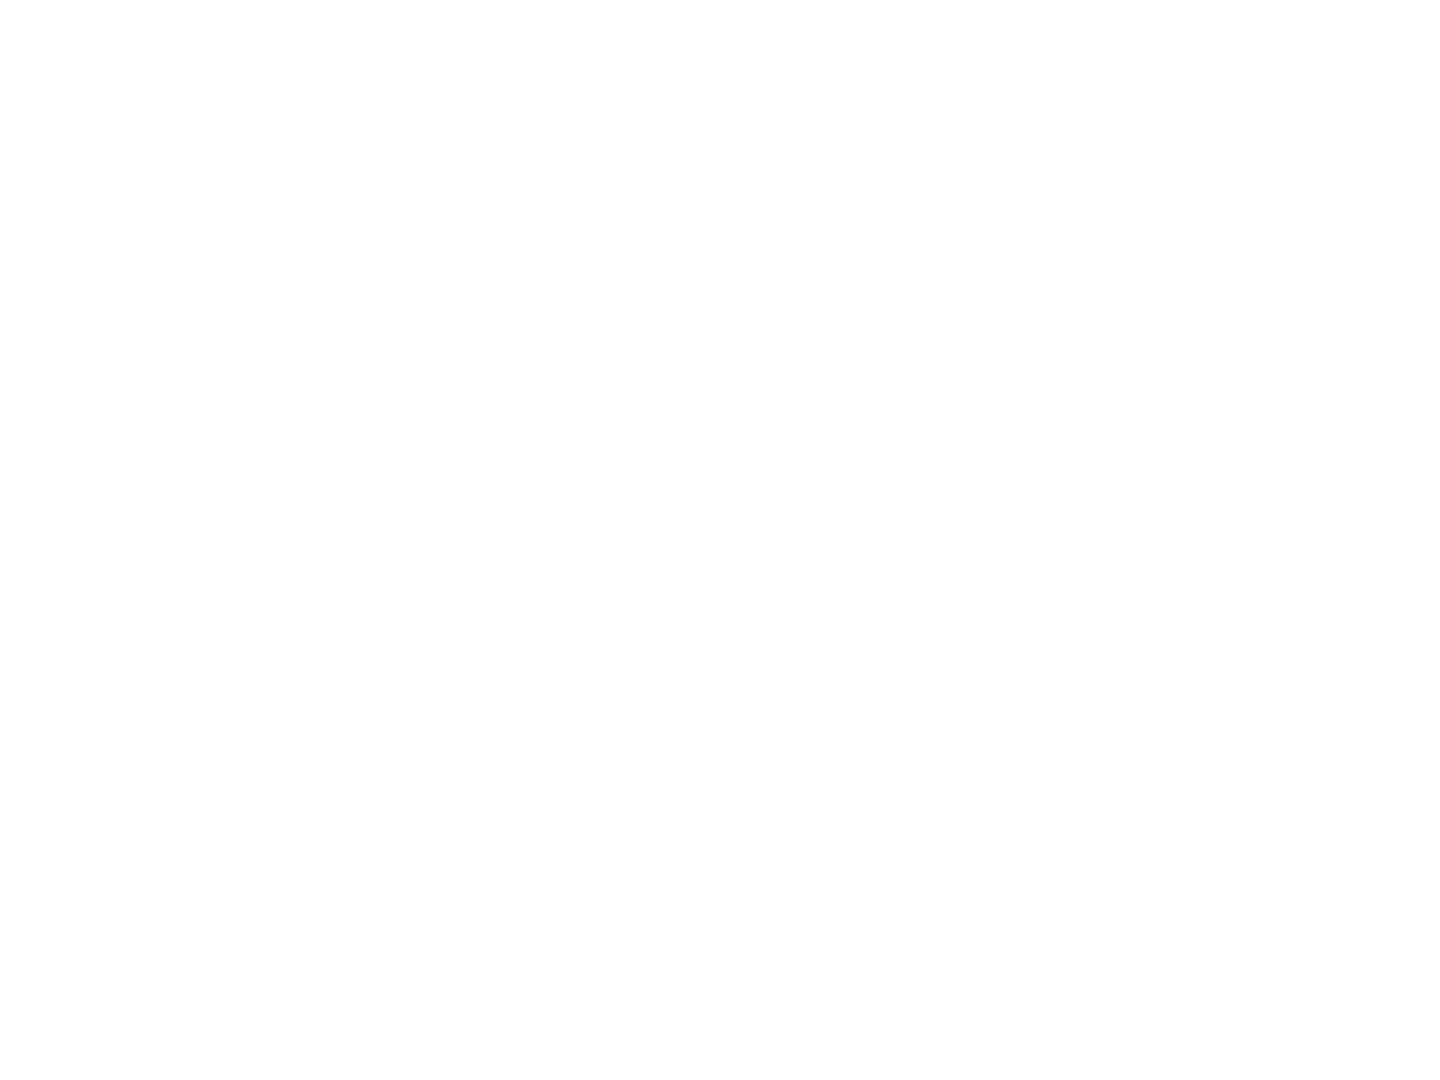 Calibration of Hækspoiler image